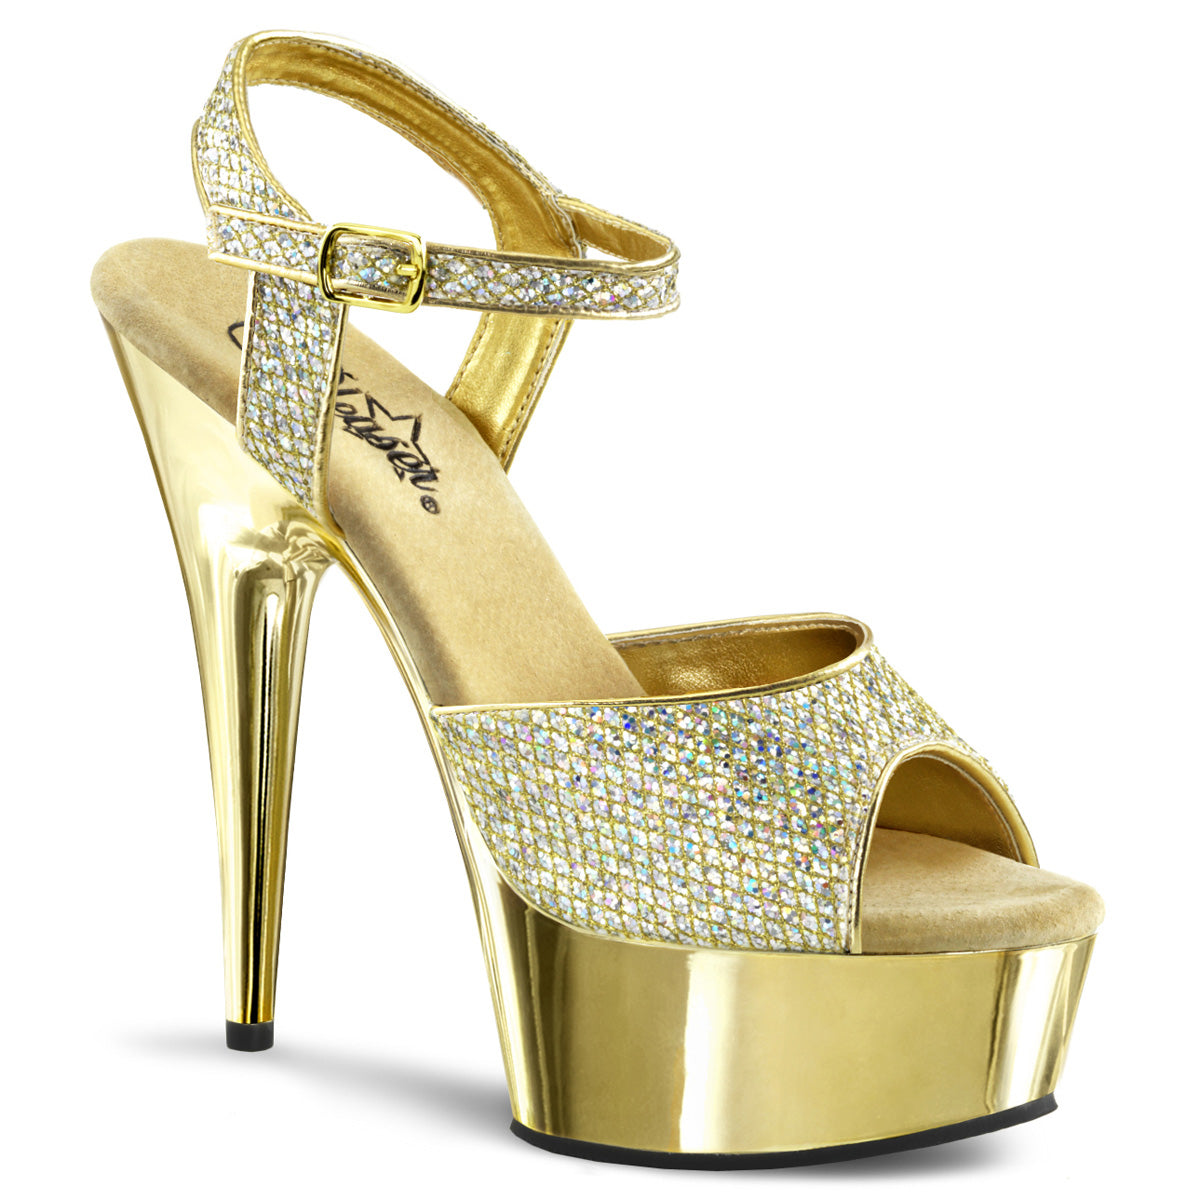 DELIGHT-609G 6 Inch Heel Gold Glitter  Stripper Platforms High Heels